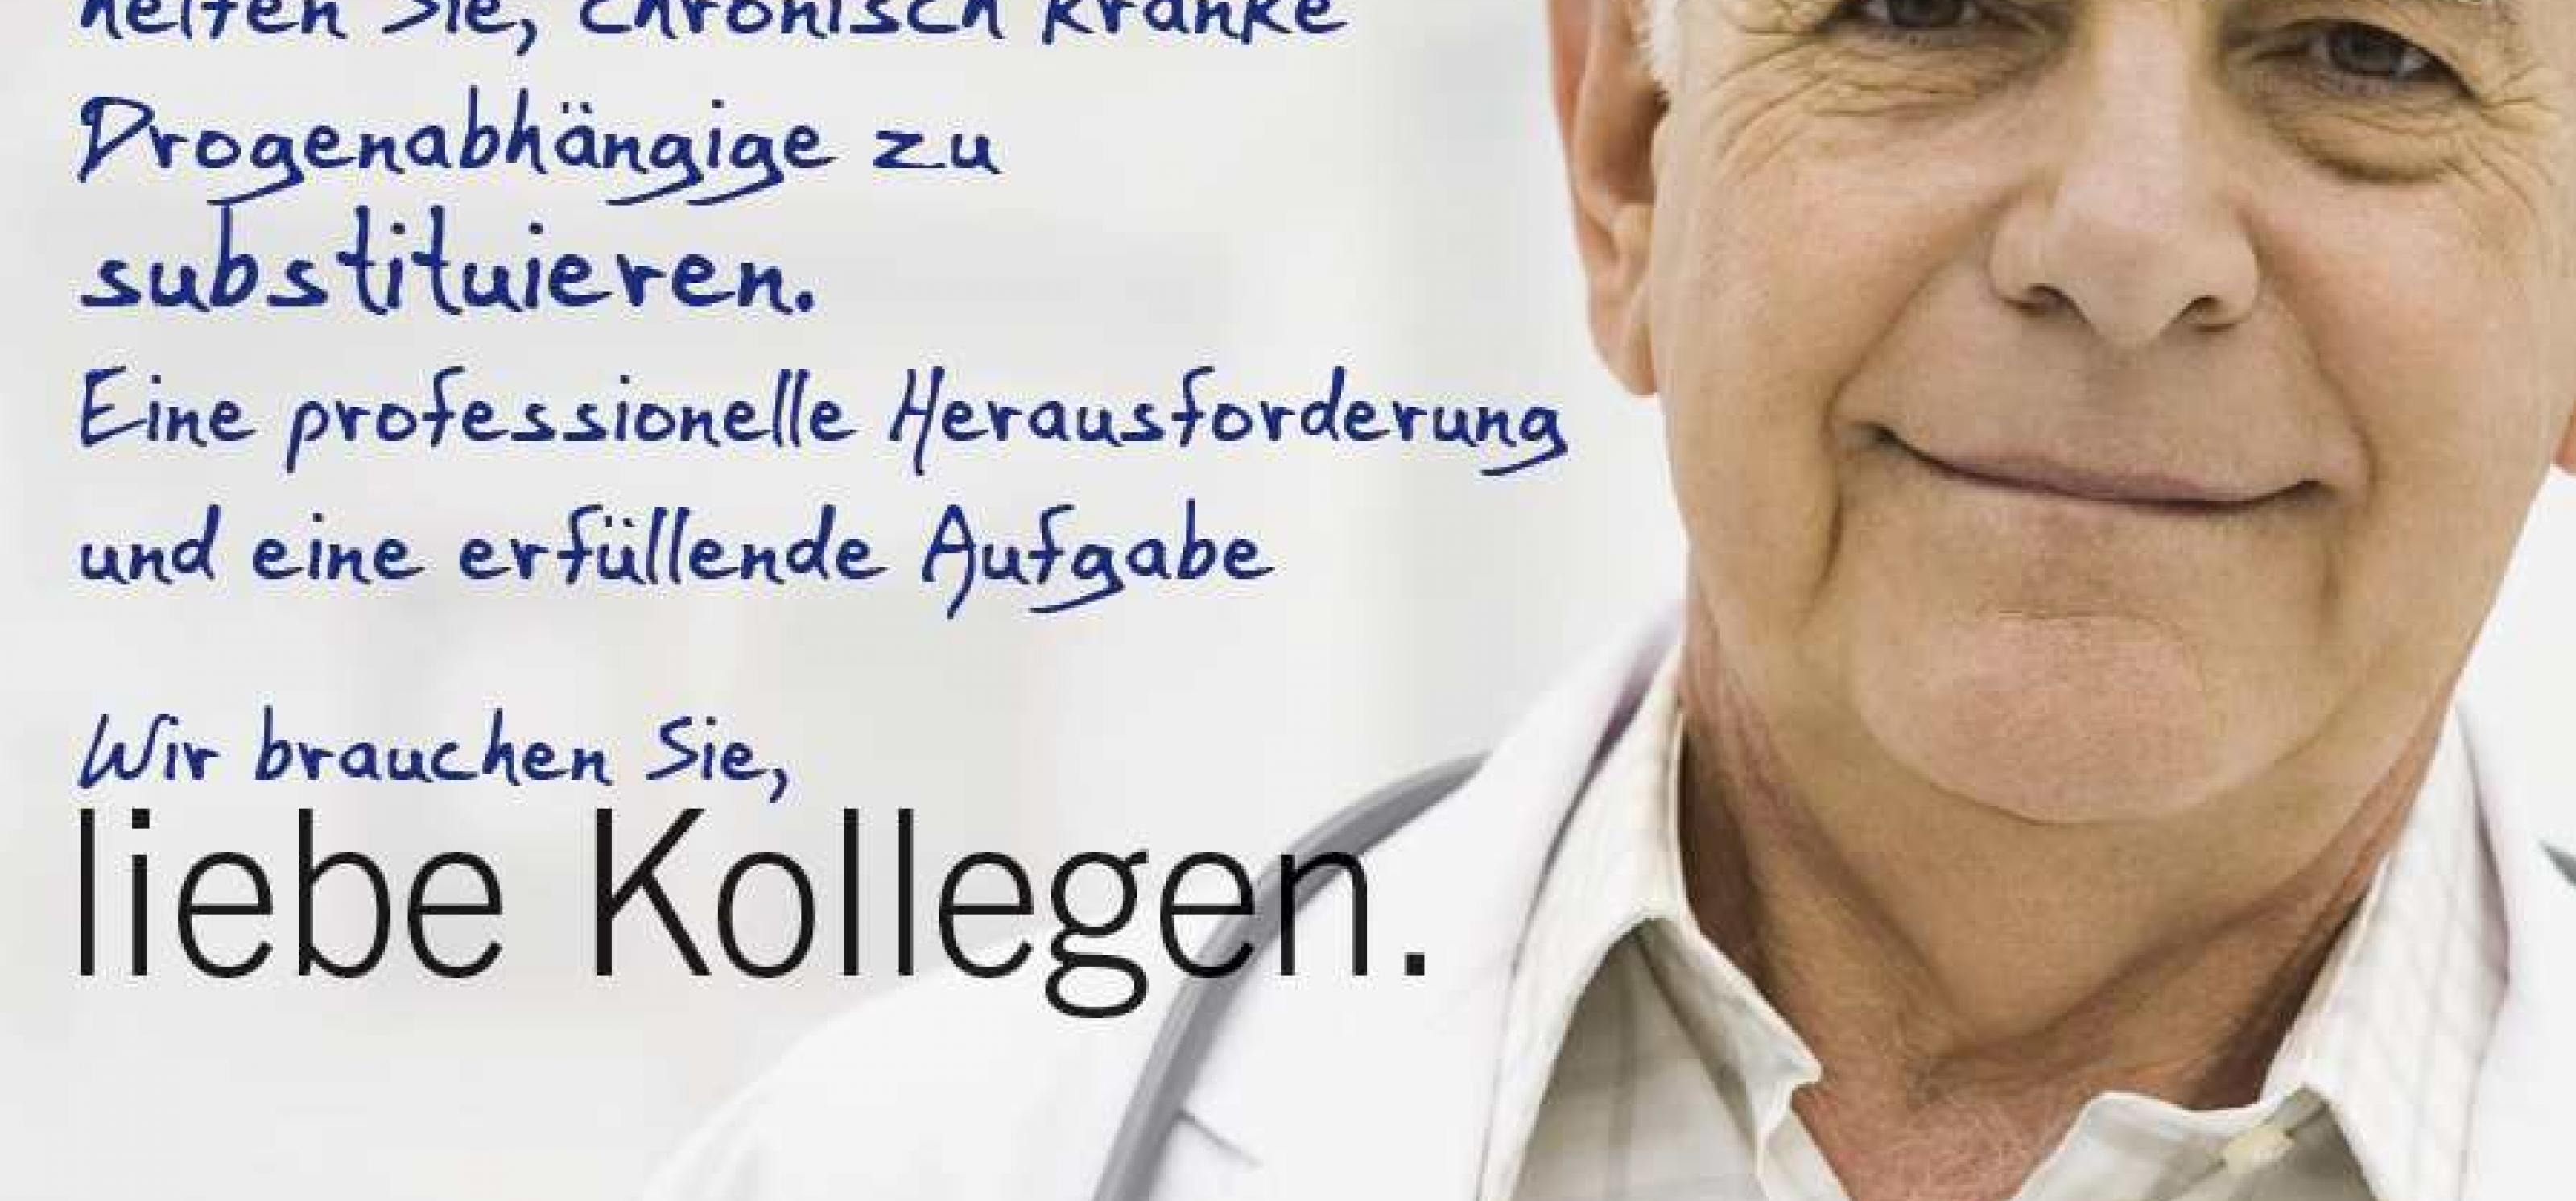 Kampagnenplakat: Arzt appelliert an Kollegen: "Bitte substituieren Sie!"